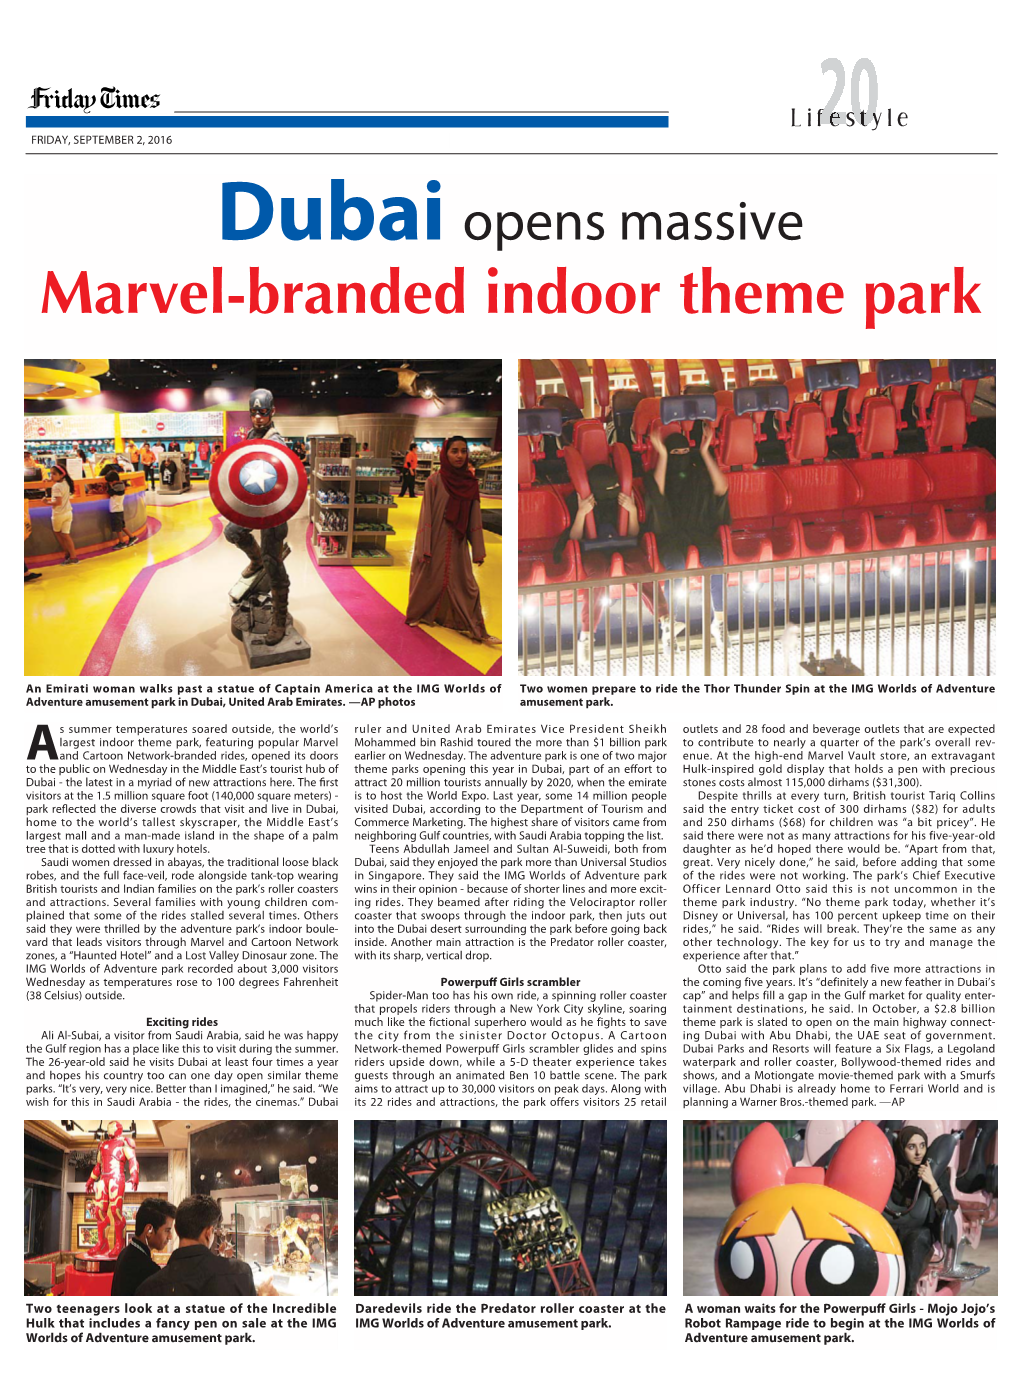 Marvel-Branded Indoor Theme Park